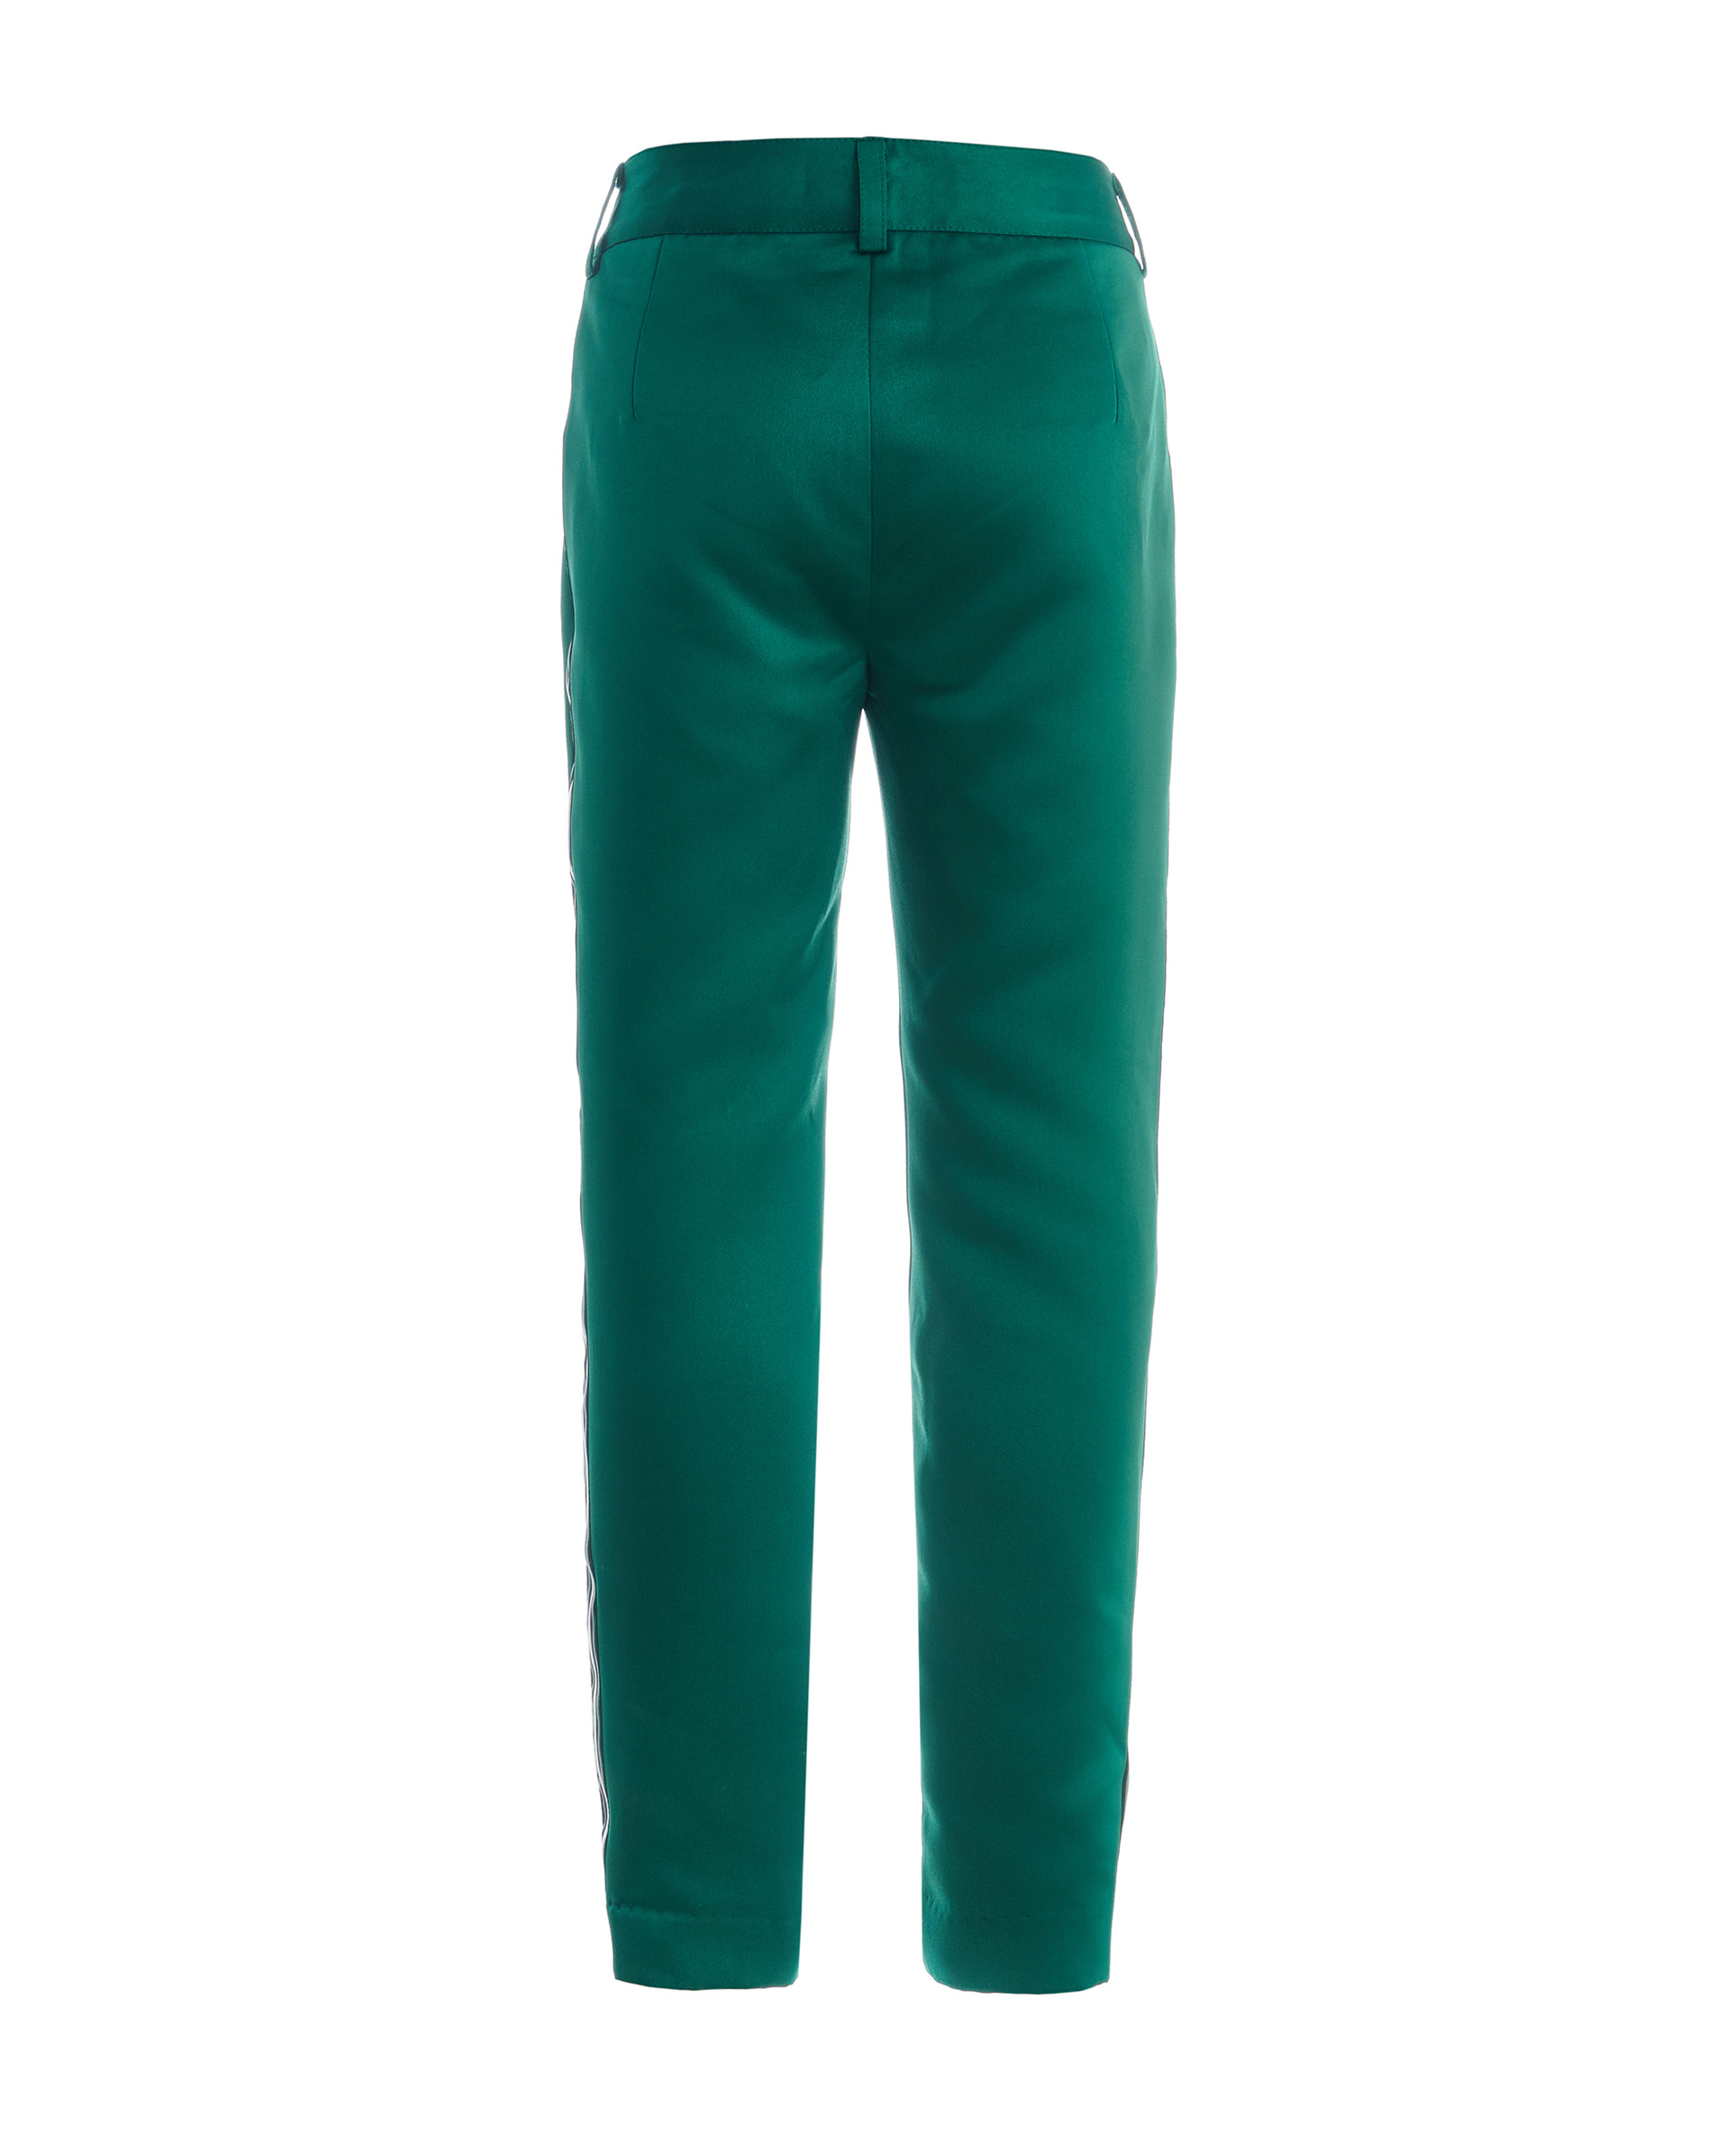 Зеленые брюки с лампасами Gulliver 219GPGJC6301, размер 140, цвет зеленый - фото 3